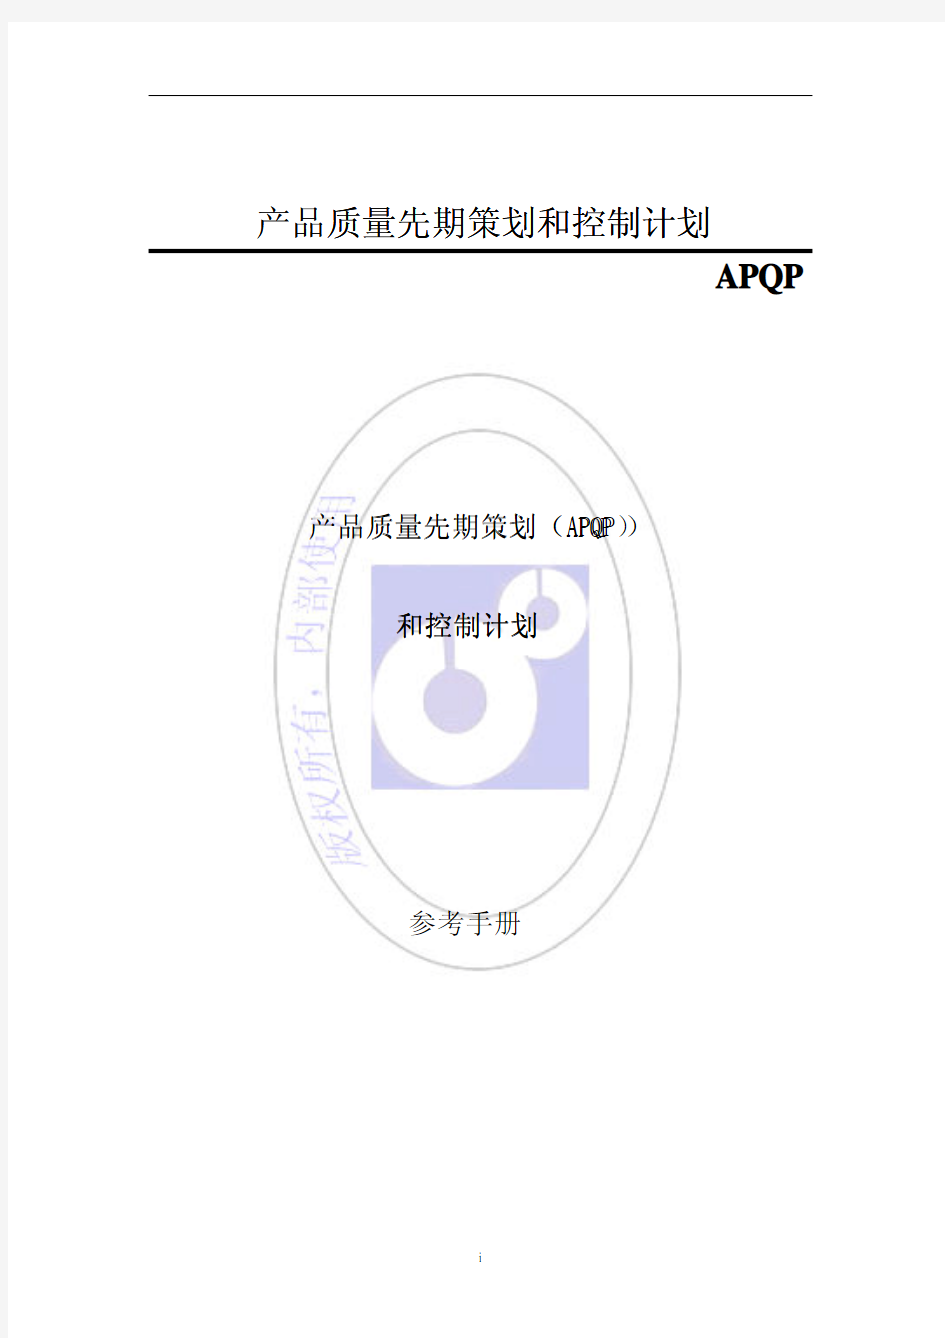 APQP 2008 第二版 中文版